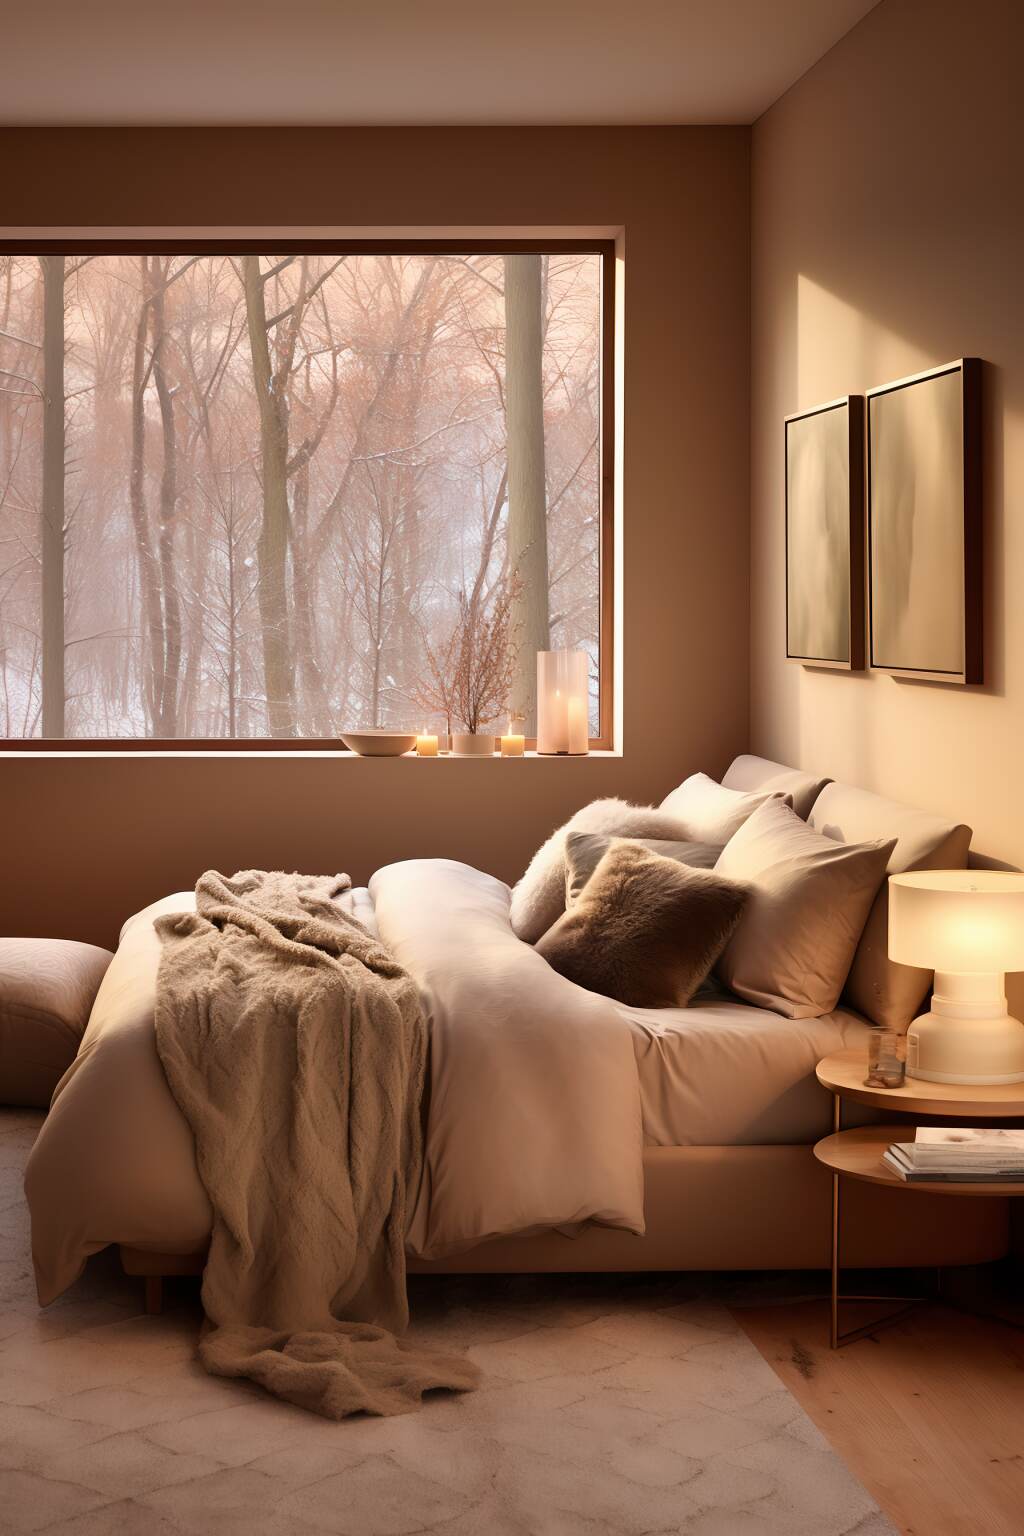 Cozy Bedroom Painted In Warm Cocoa Tones